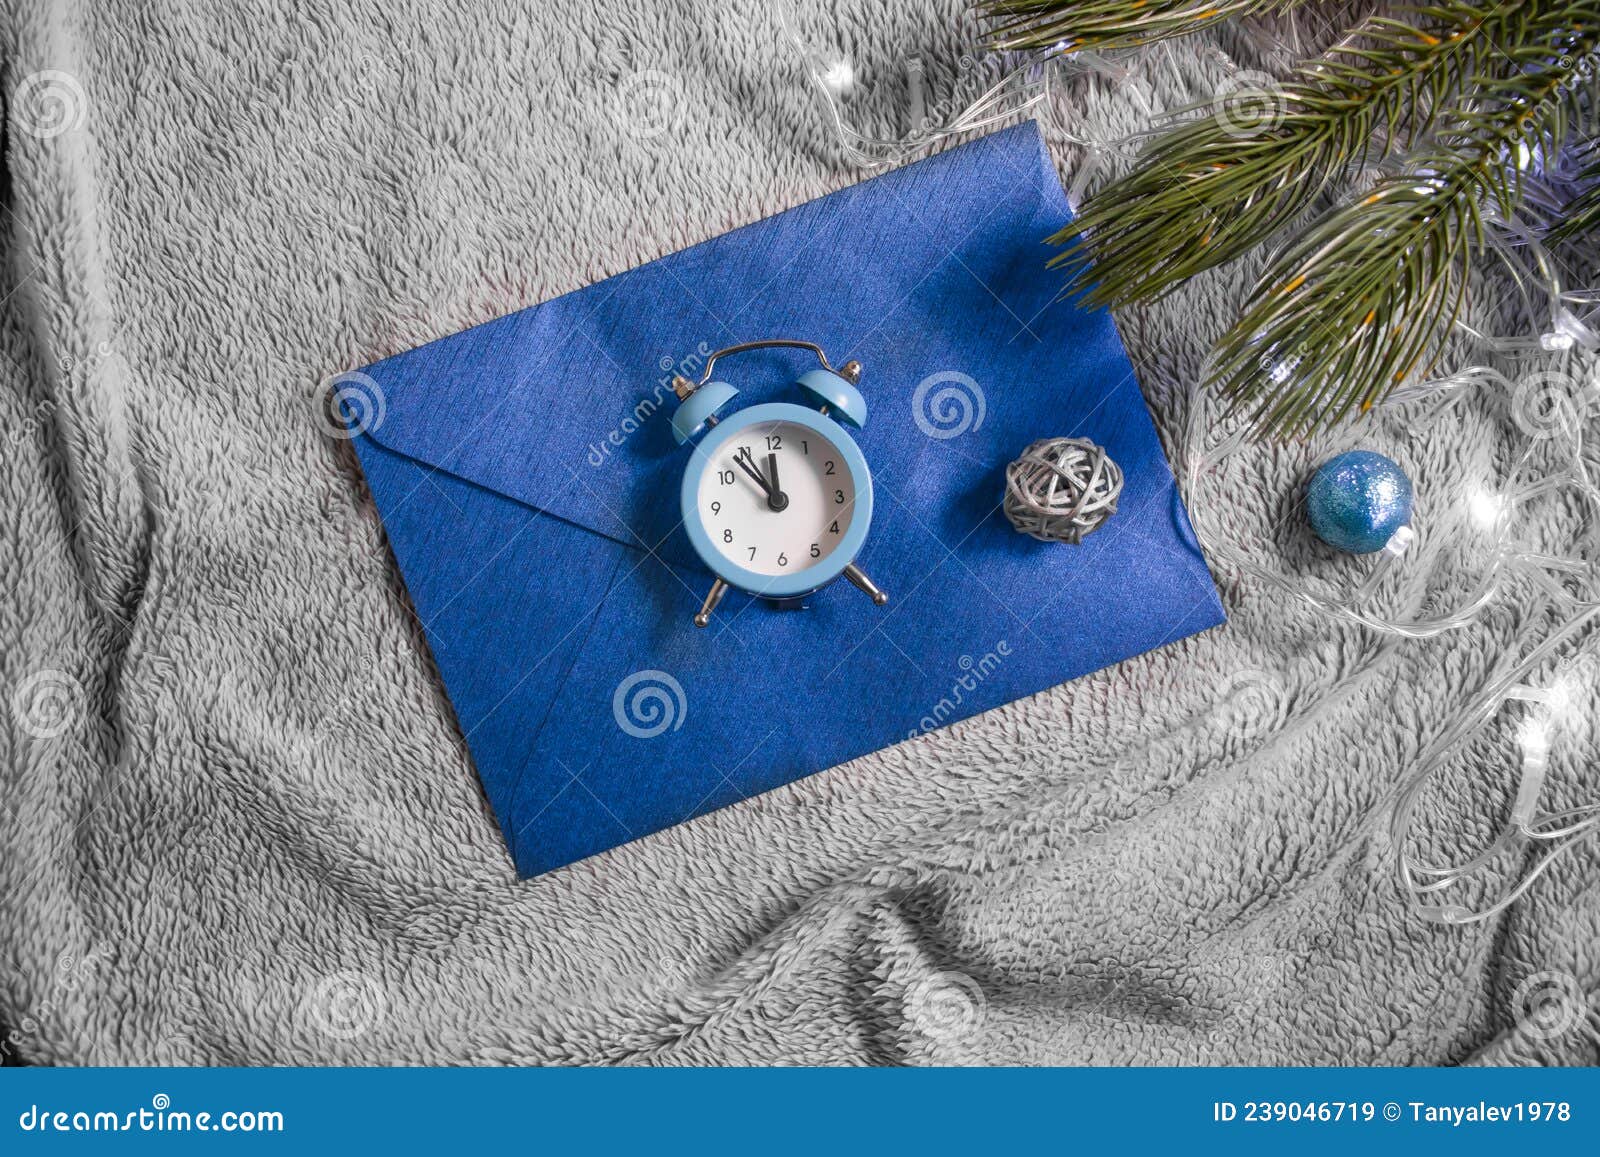 envelope, borde year texture merry tree , clock christmas background